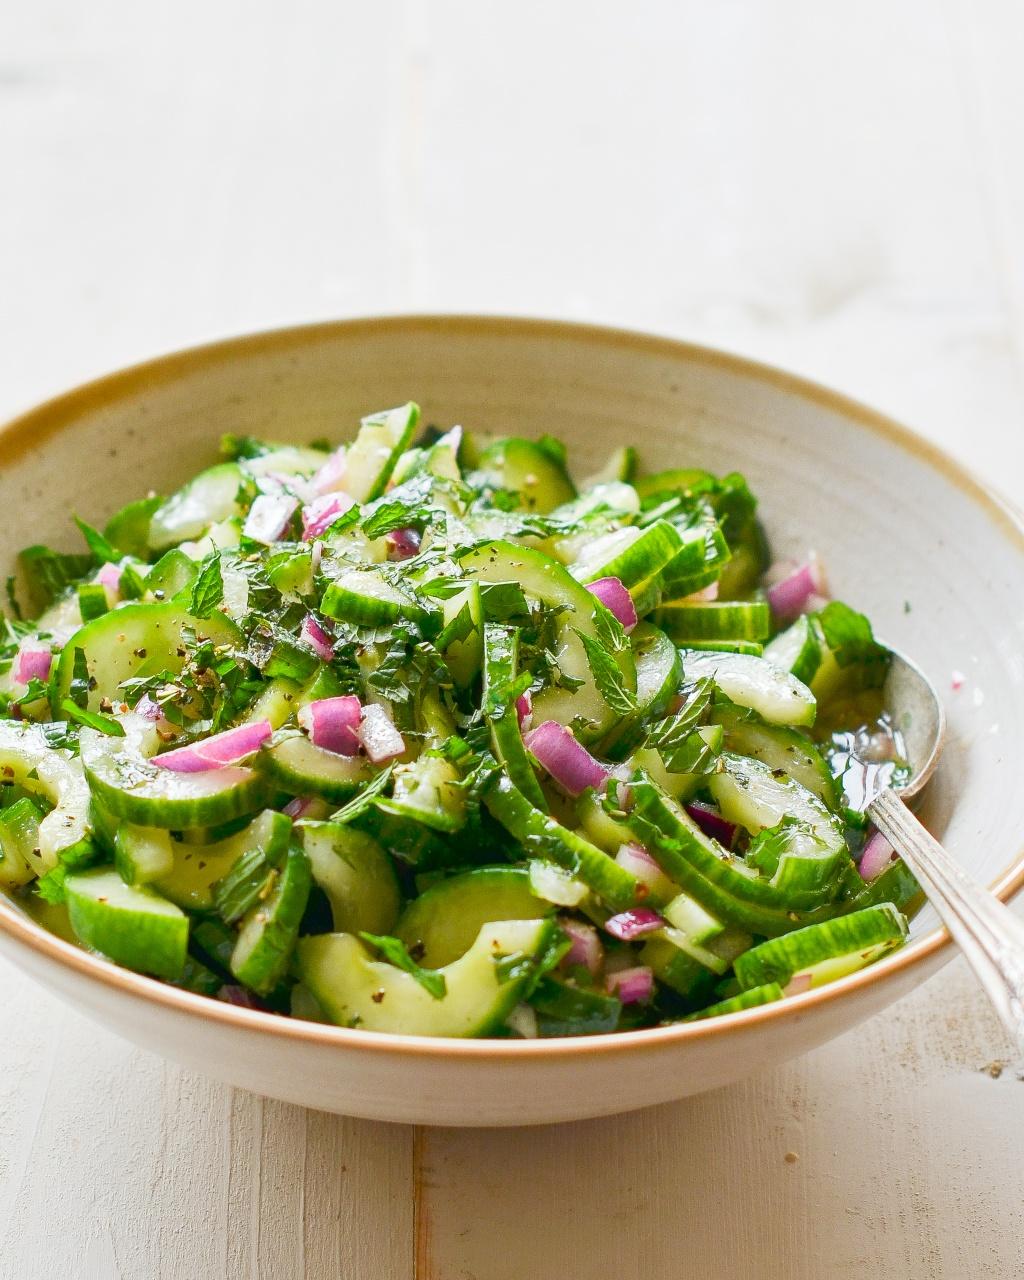 Image for Cucumber salad.